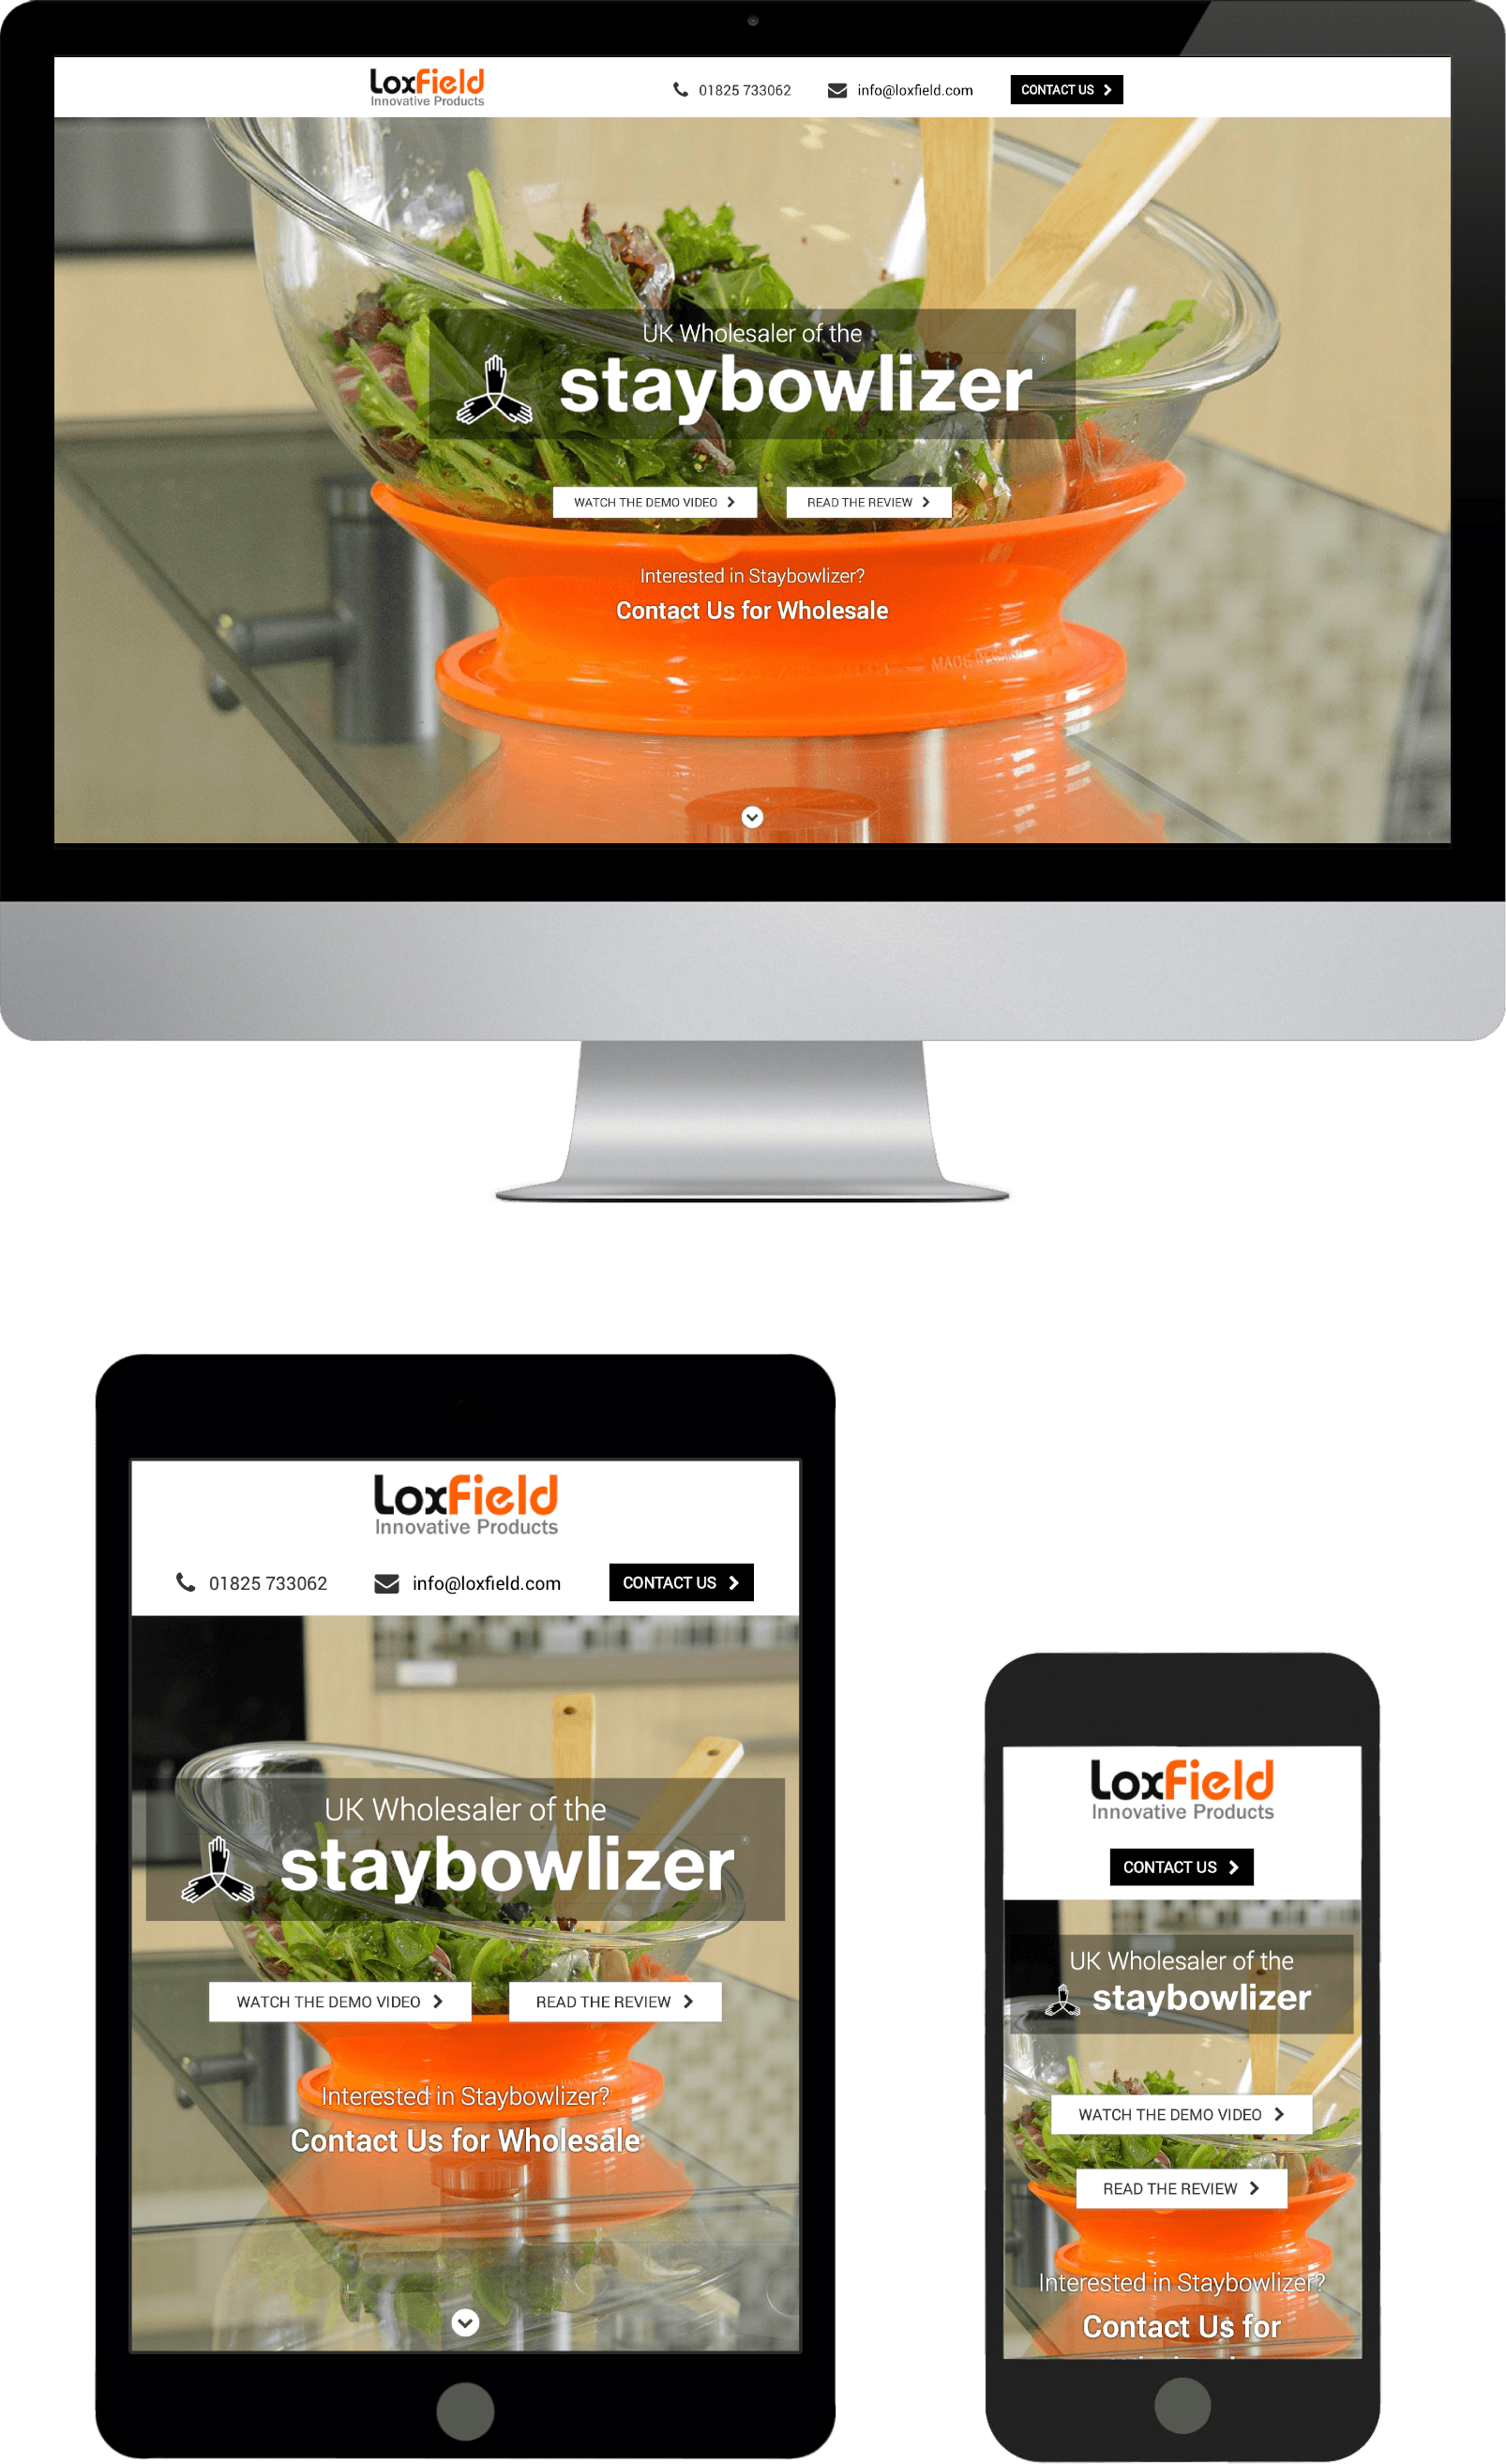 Loxfield Staybowlizer One Page Responsive Web Design